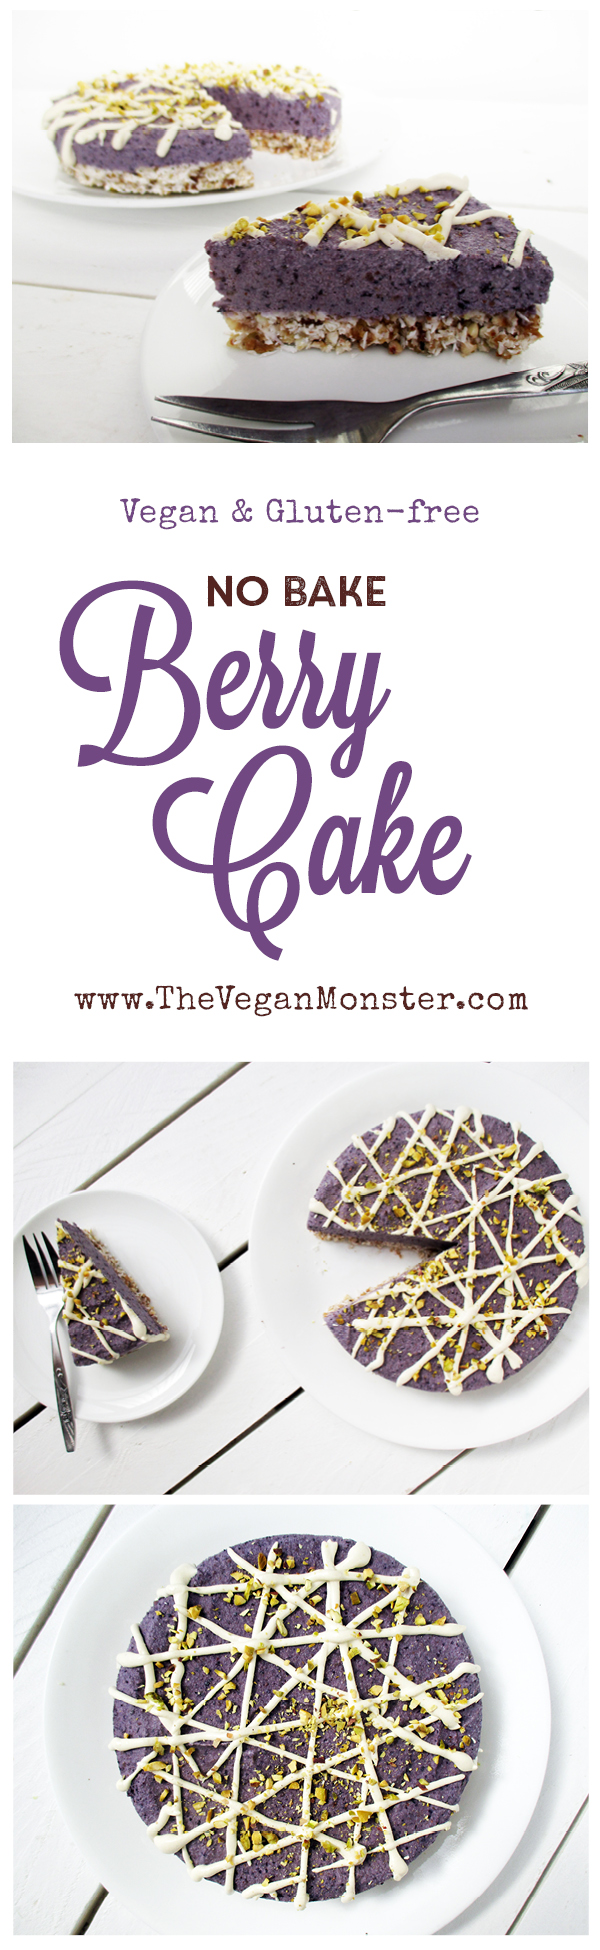 vegan gluten-free no-bake berry cake recipe without refined sugar